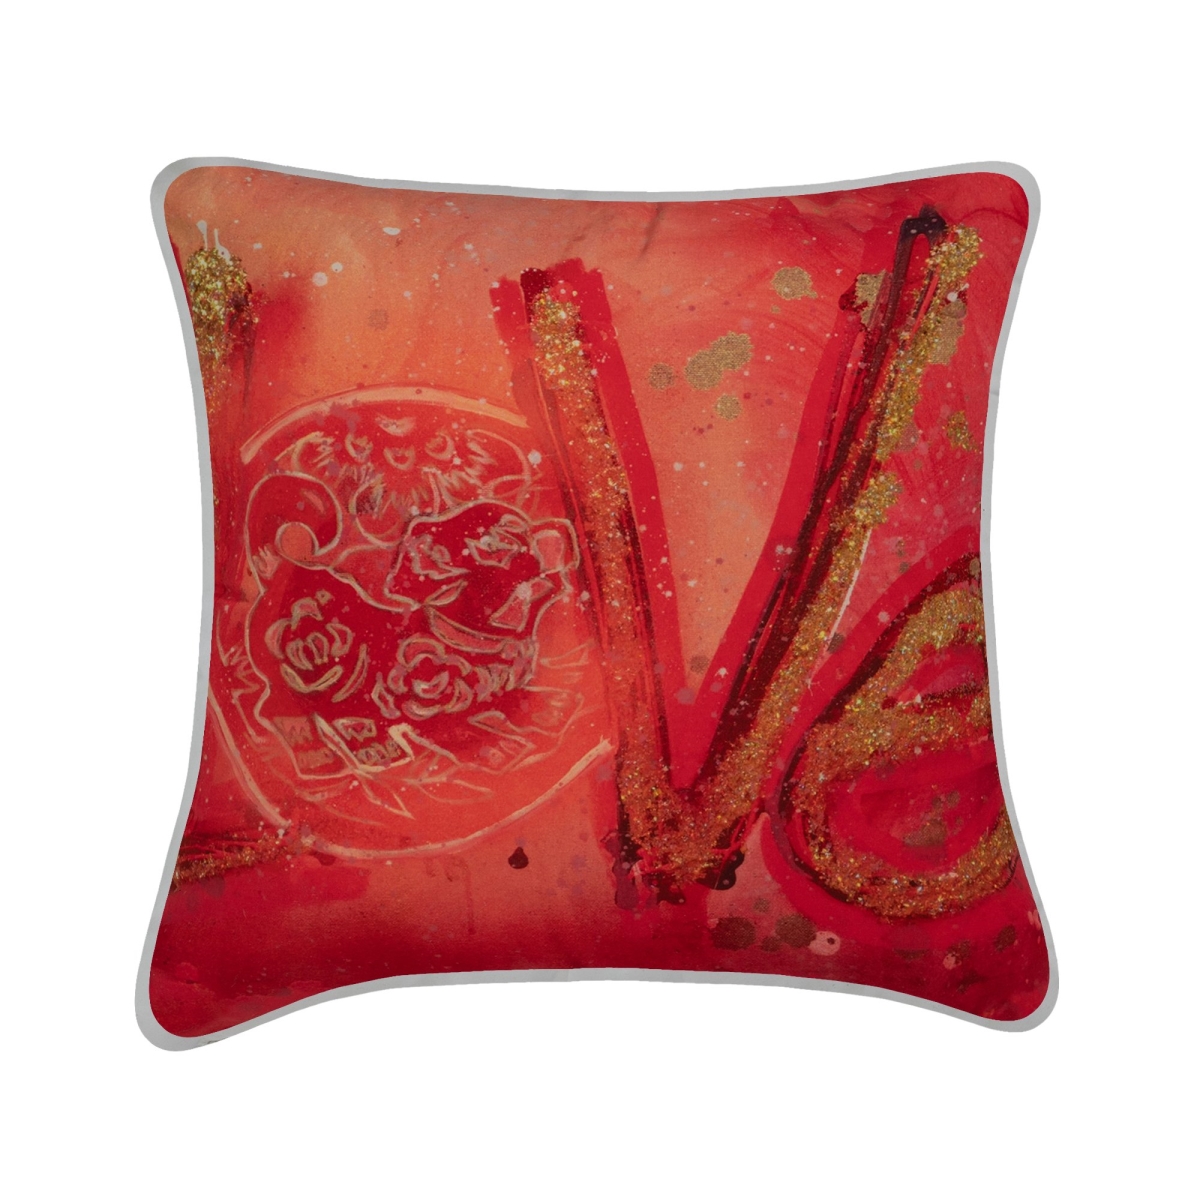 Sq-pi-jg-lobo-1818 18 X 18 In. Jessica Gorlicky Love Boudoir Decorative Cushion - 100 Percent Polyester